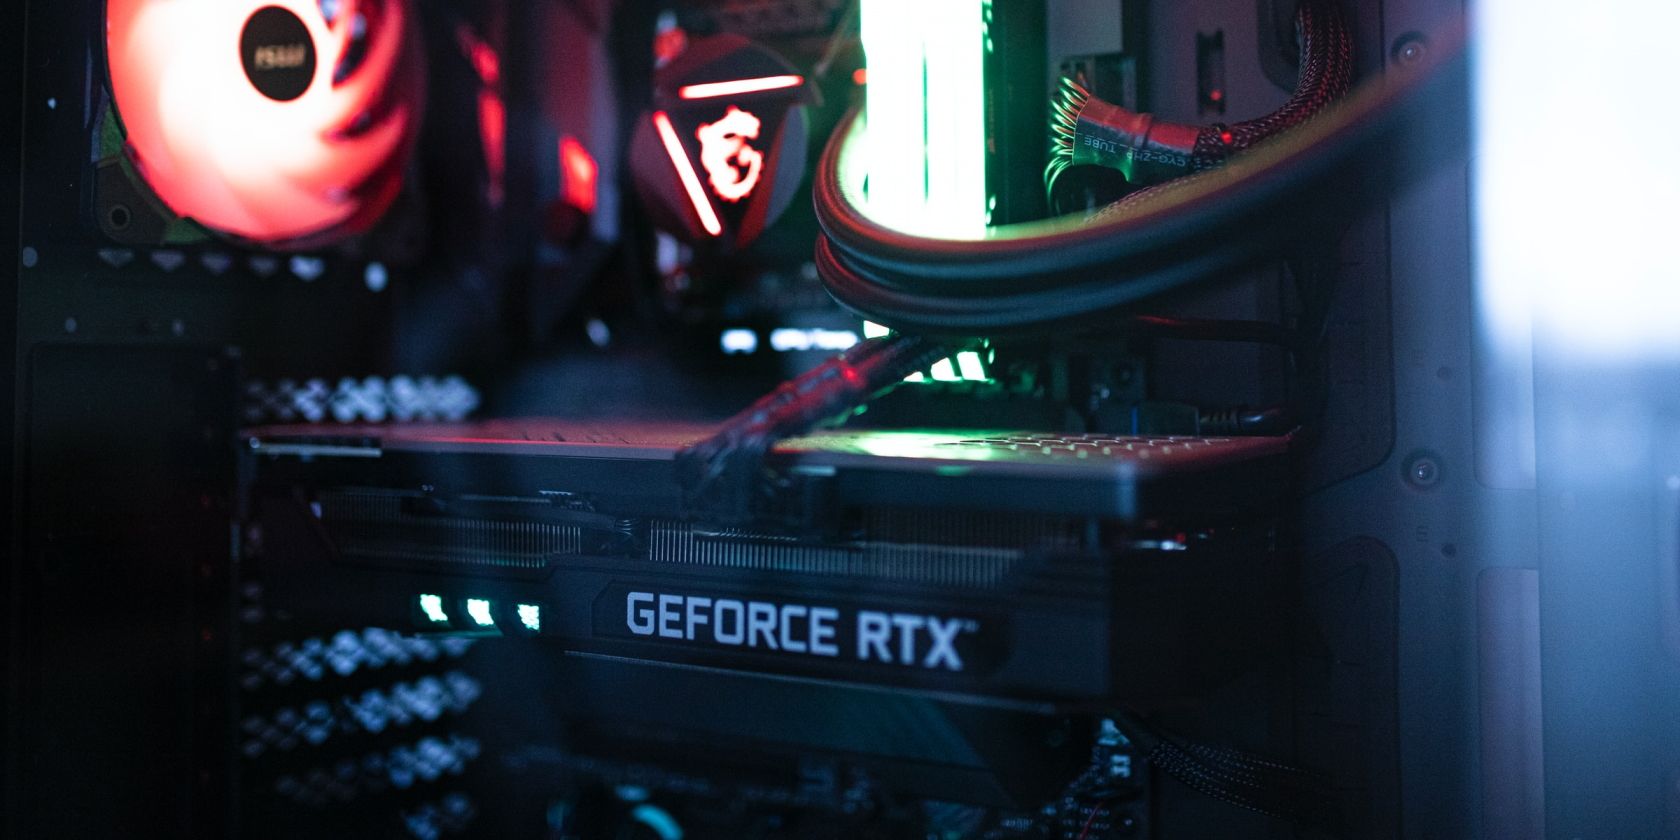 GeForce RTX GPU installed in a PC